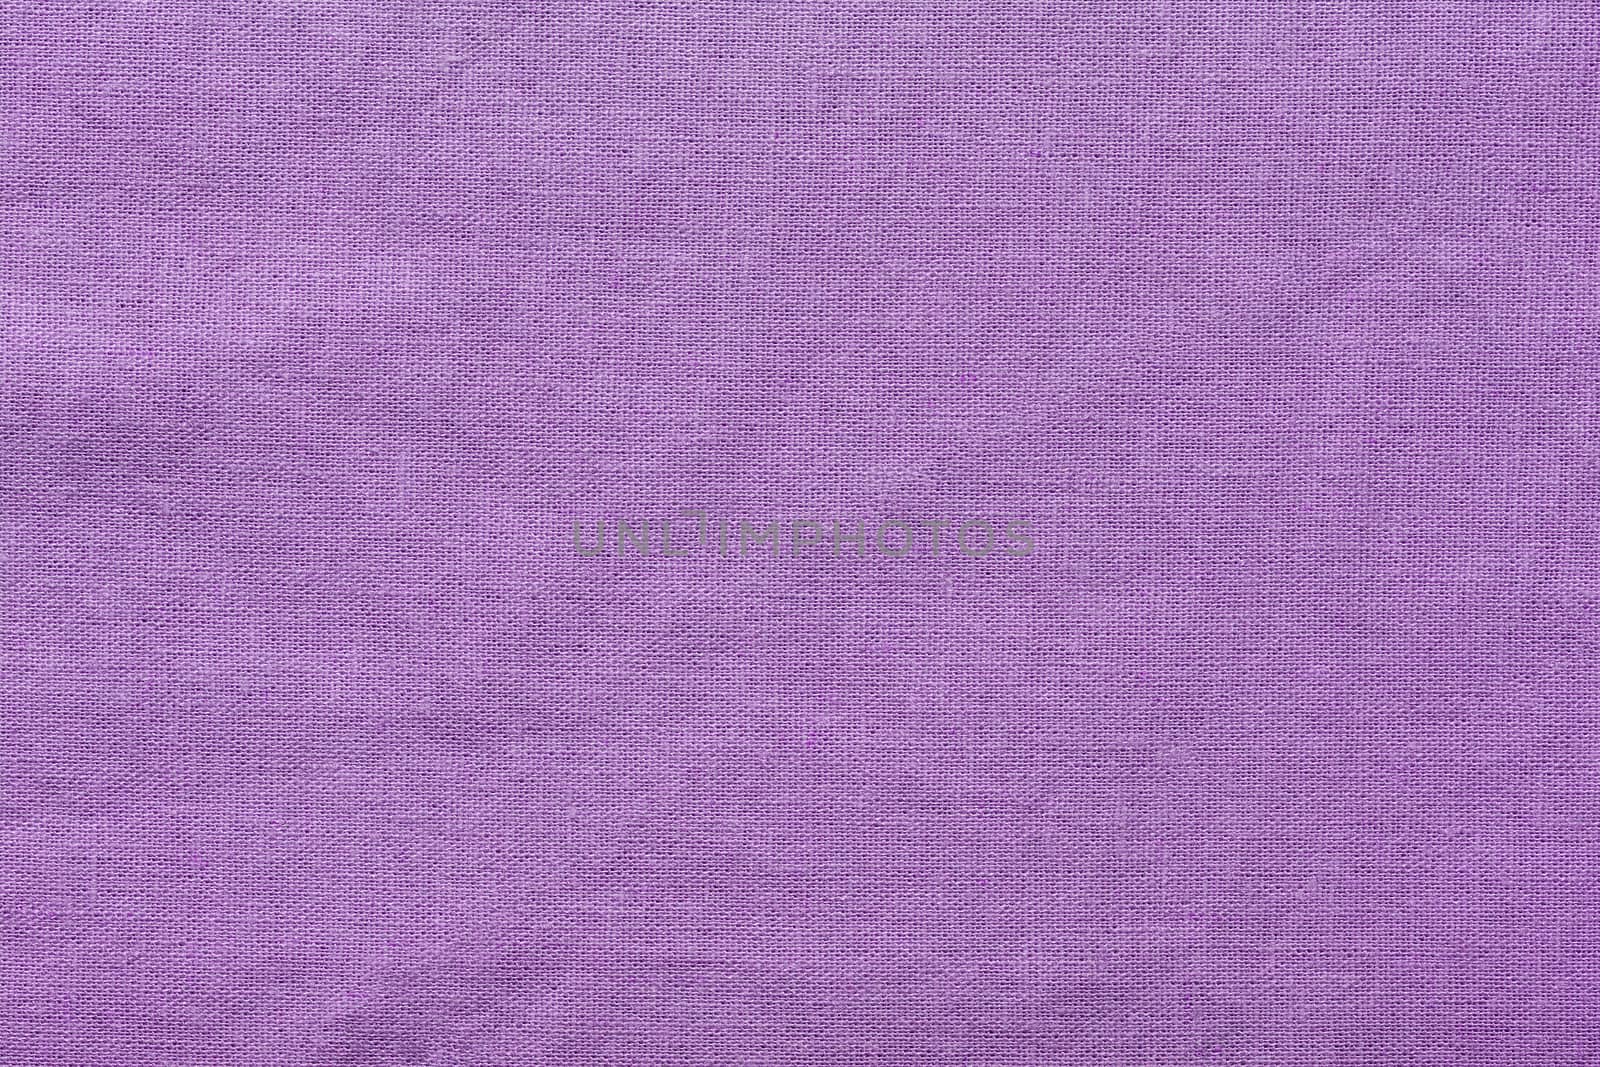 Purple burlap background and texture, The texture of the burlap, closeup